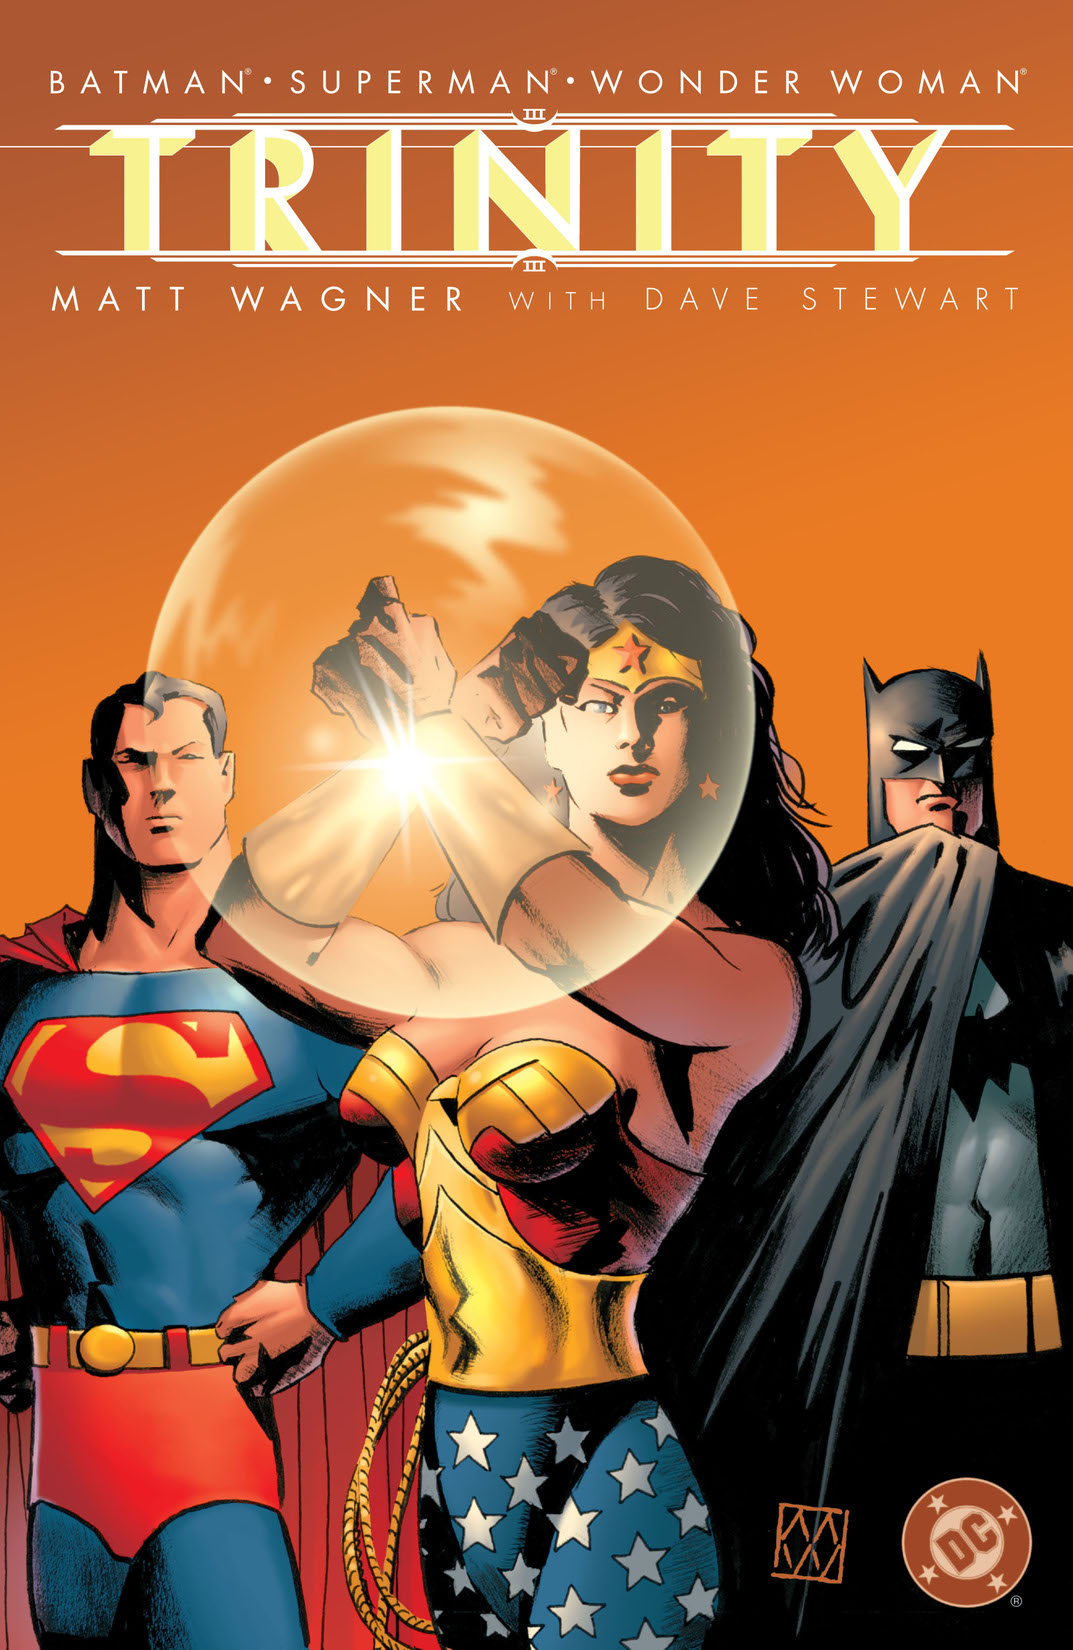 Batman Superman Wonder Woman: Trinity #3 preview images